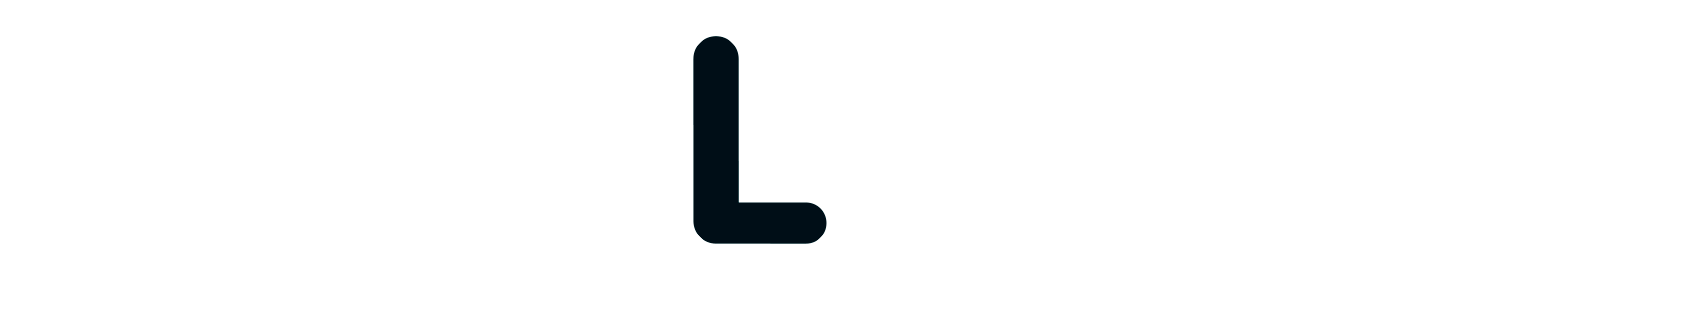 Lars Monsen logo